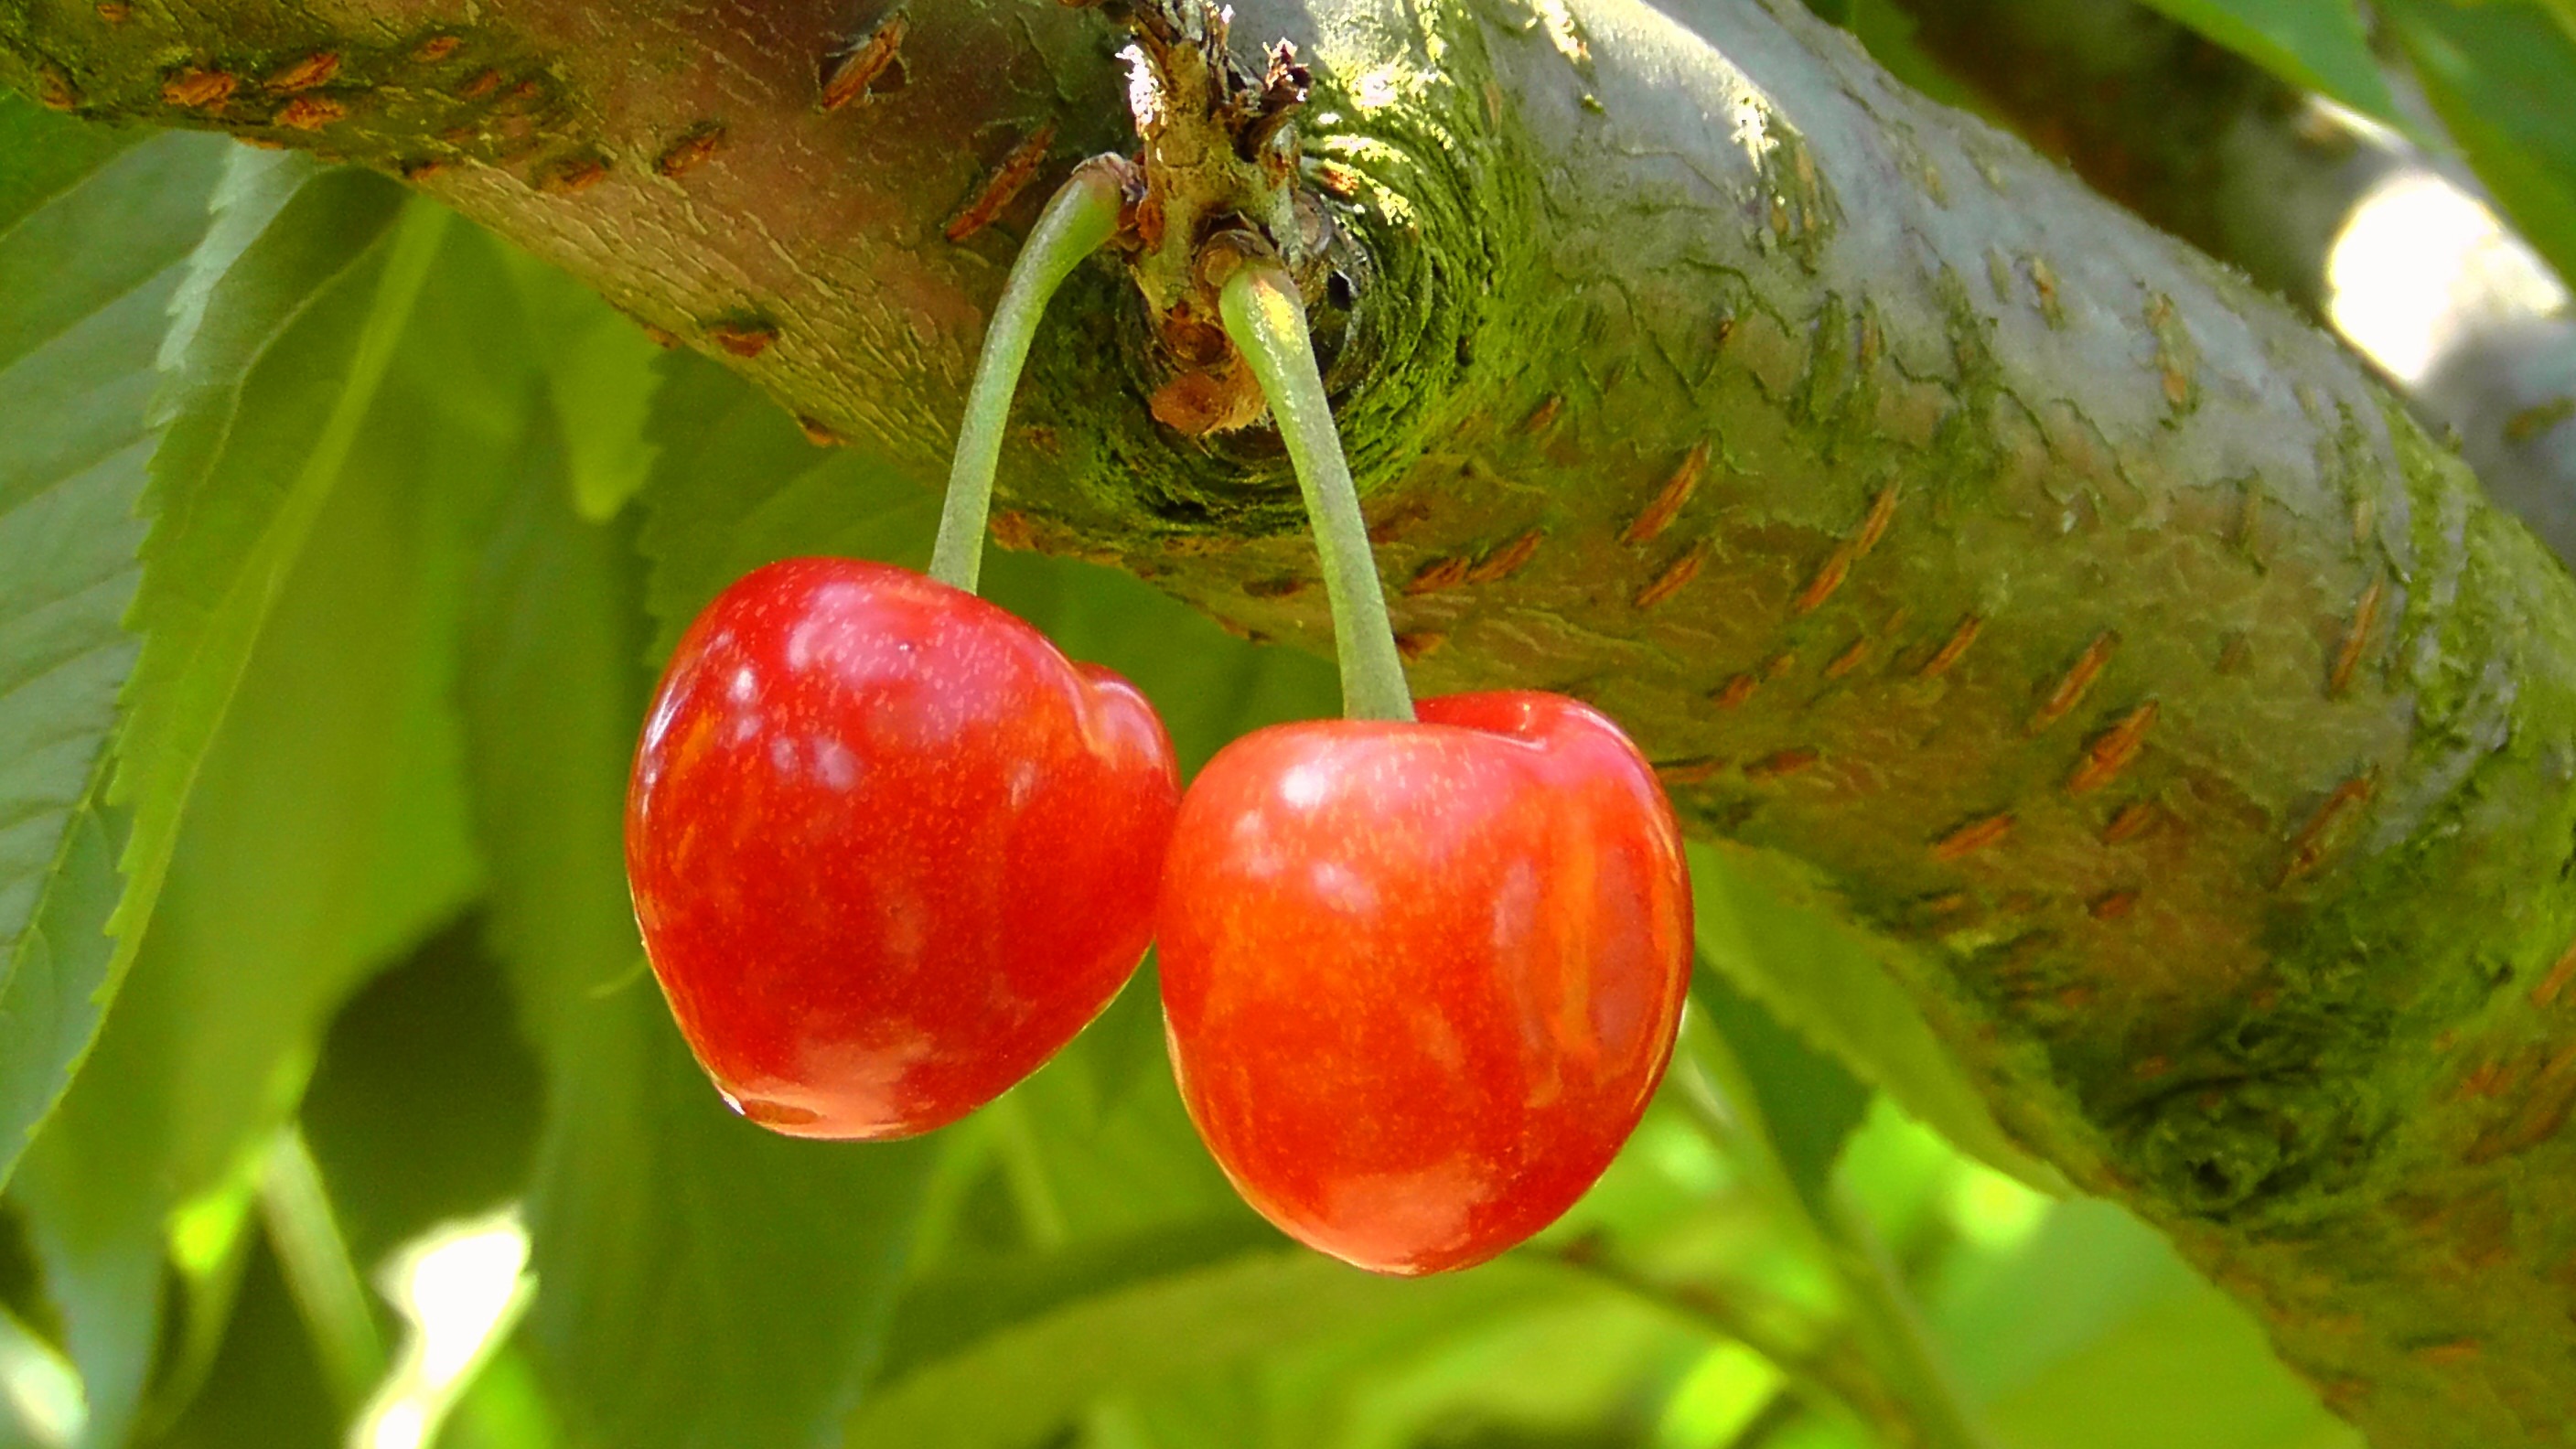 8k Sweet Cherry Images